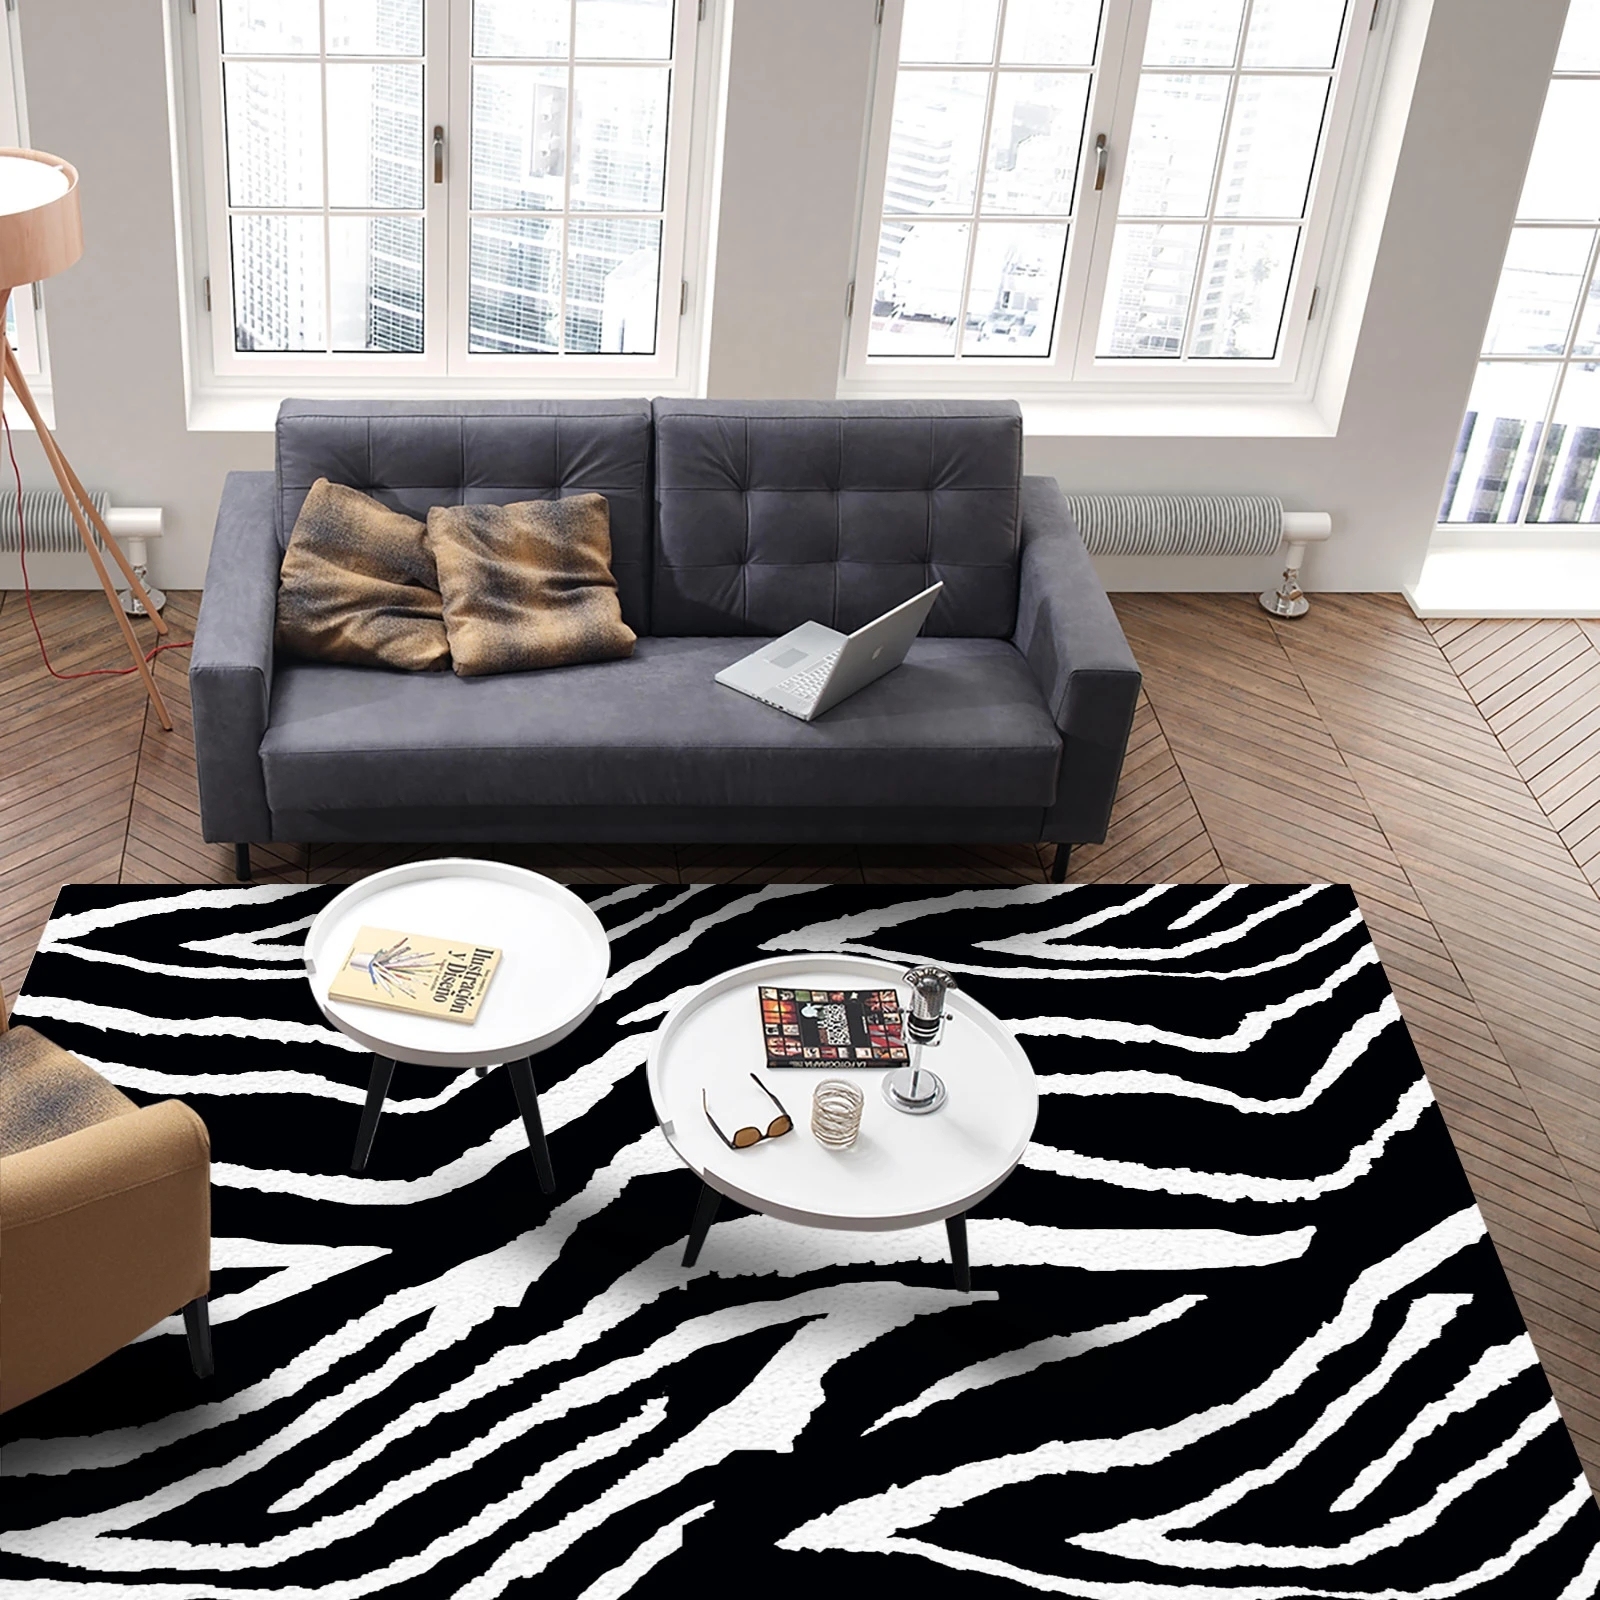 Zebra Animal Print Black And White Area Rug For Living Room Kids Bedroom Bedside Rugs Soft Carpets Home Sofa Table Decor Mat 4' x 5' - image 1 of 6